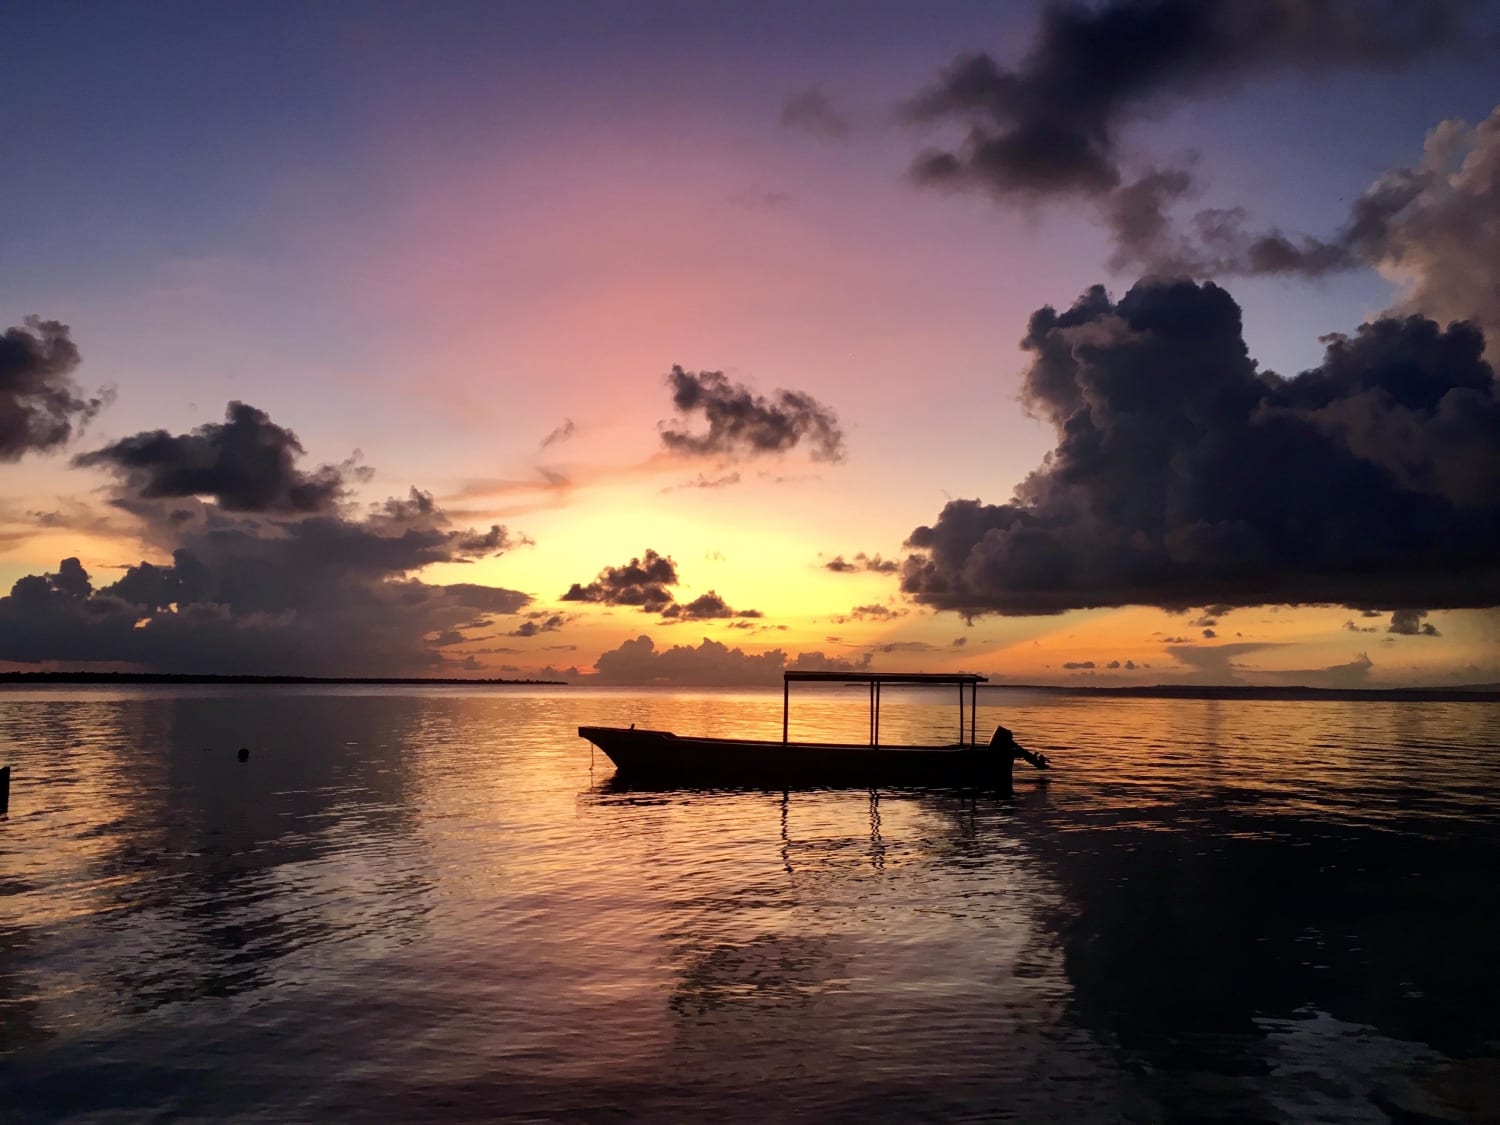 Sunset at Palau Hoga, Indonesia (Photo credit to Katuk Patah)